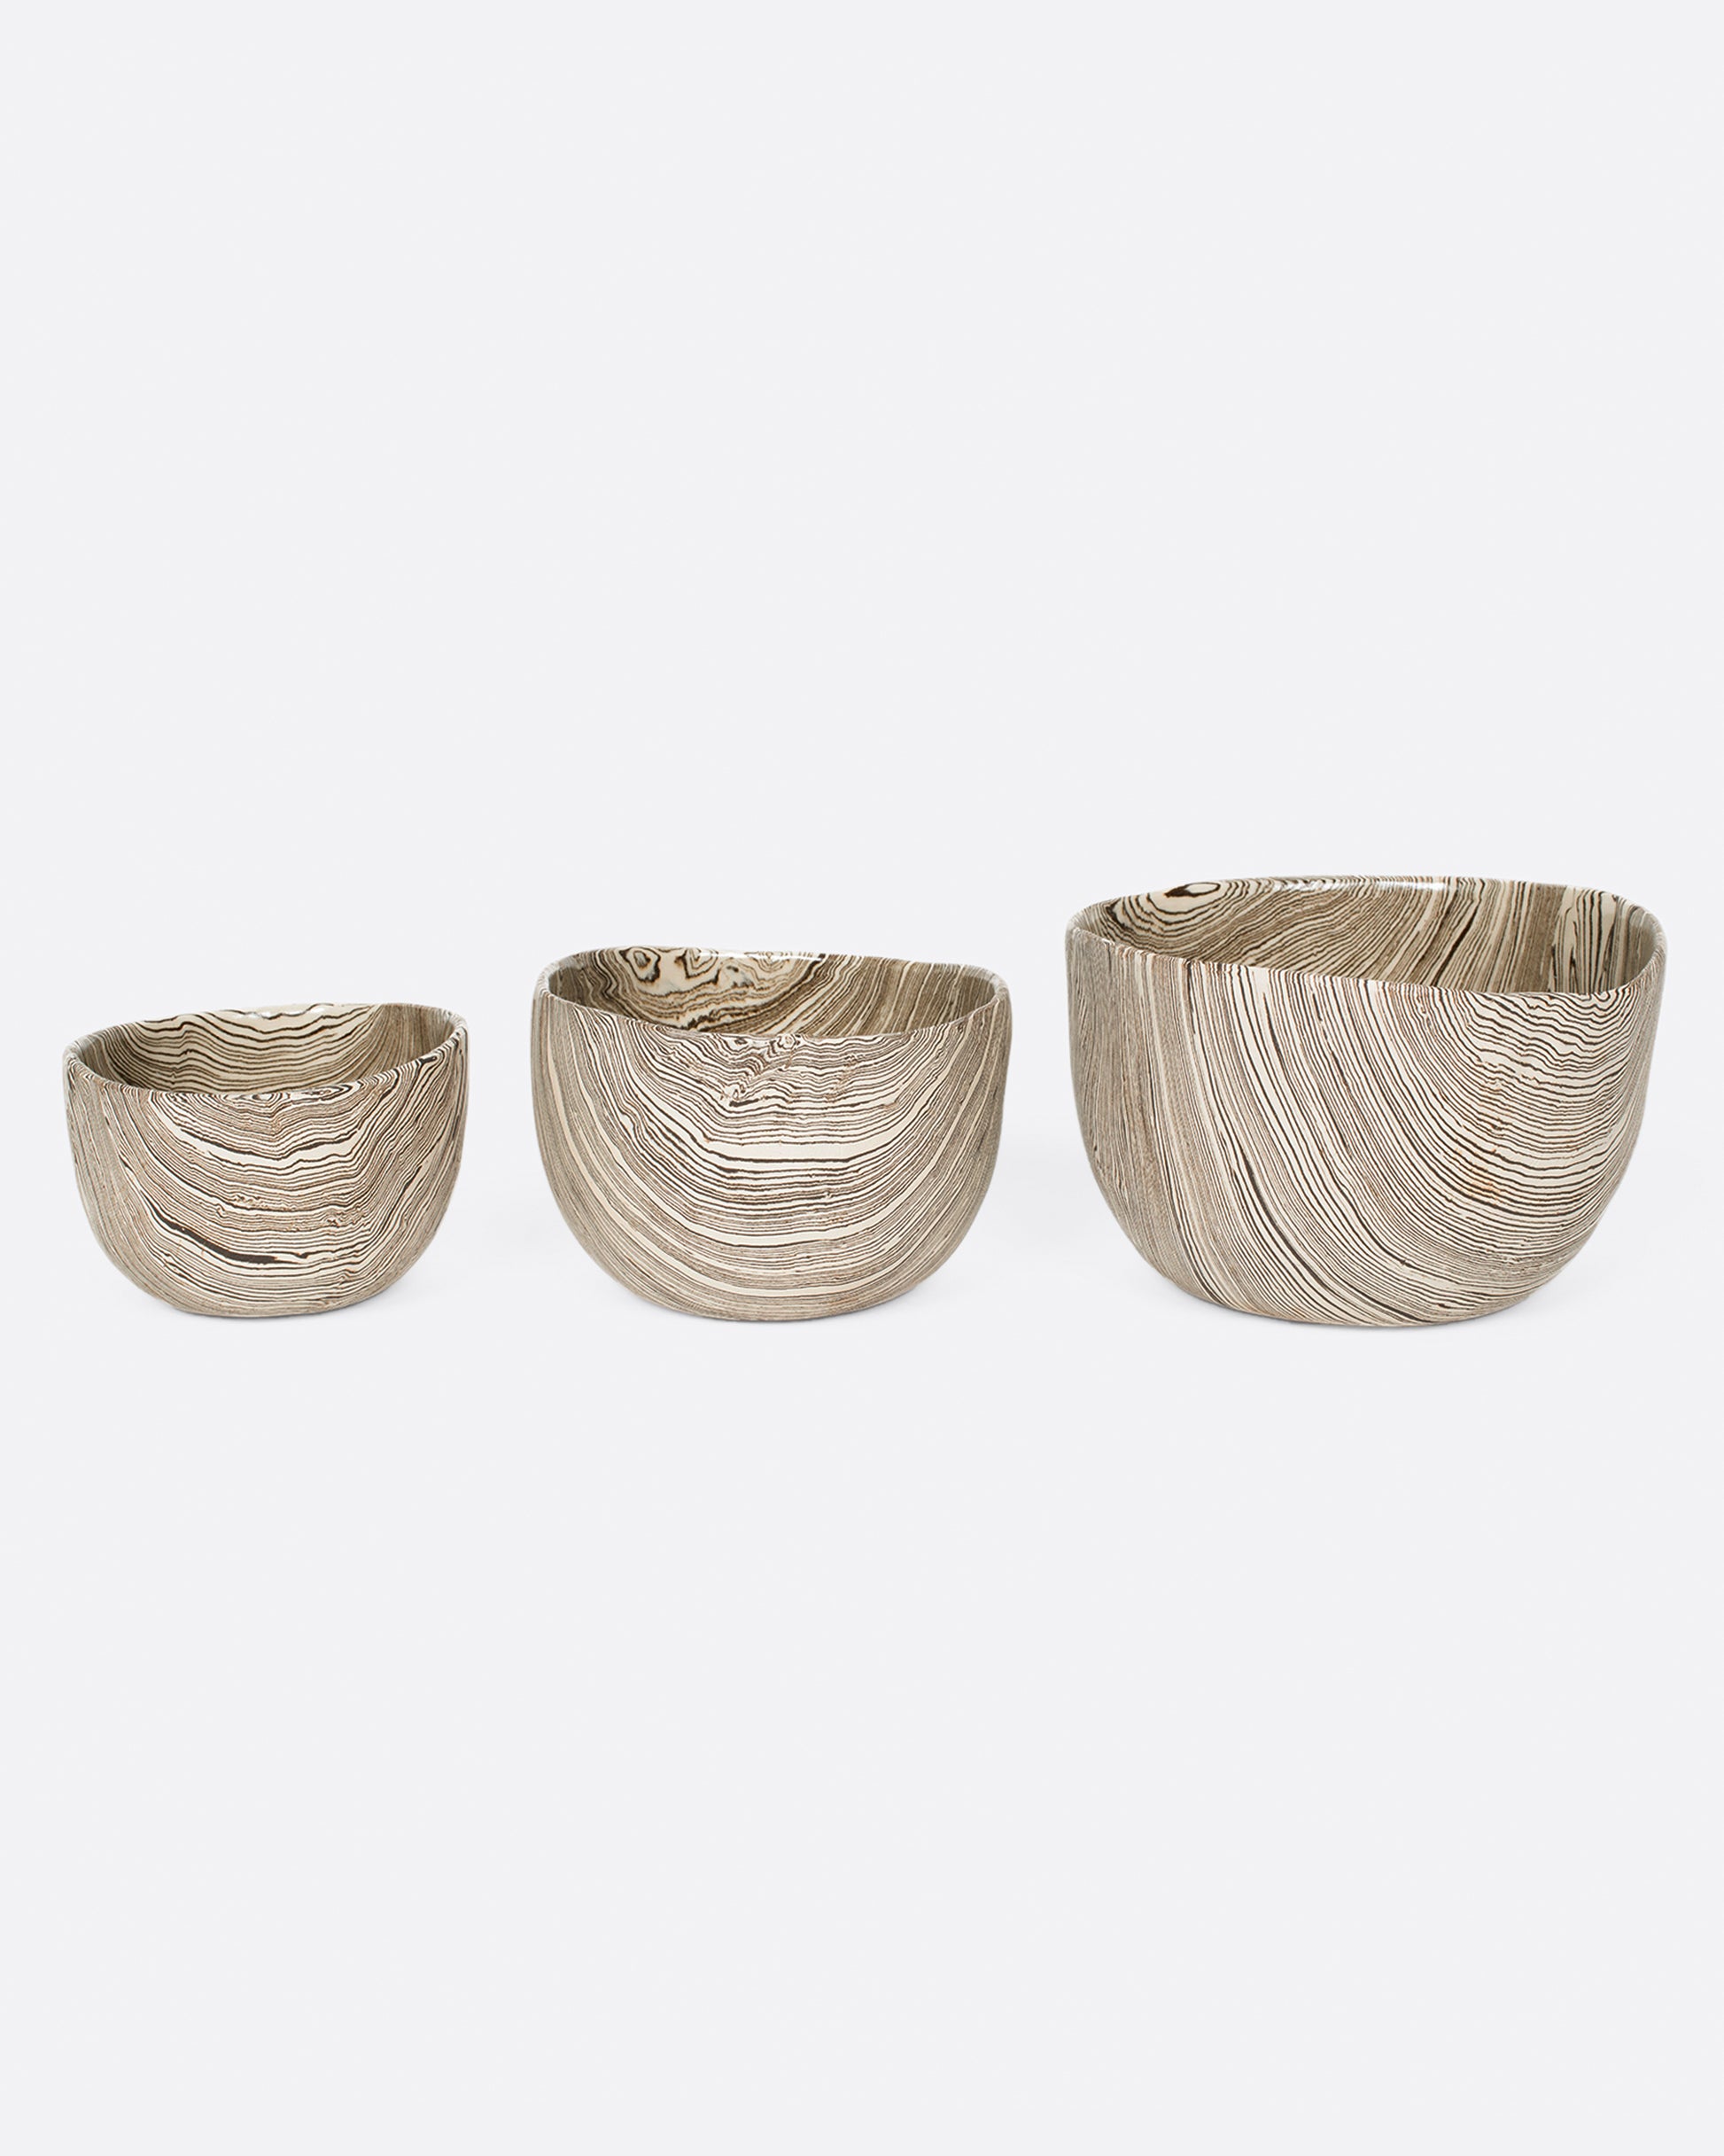 A group of three white and brown stoneware nerikomi bowls.